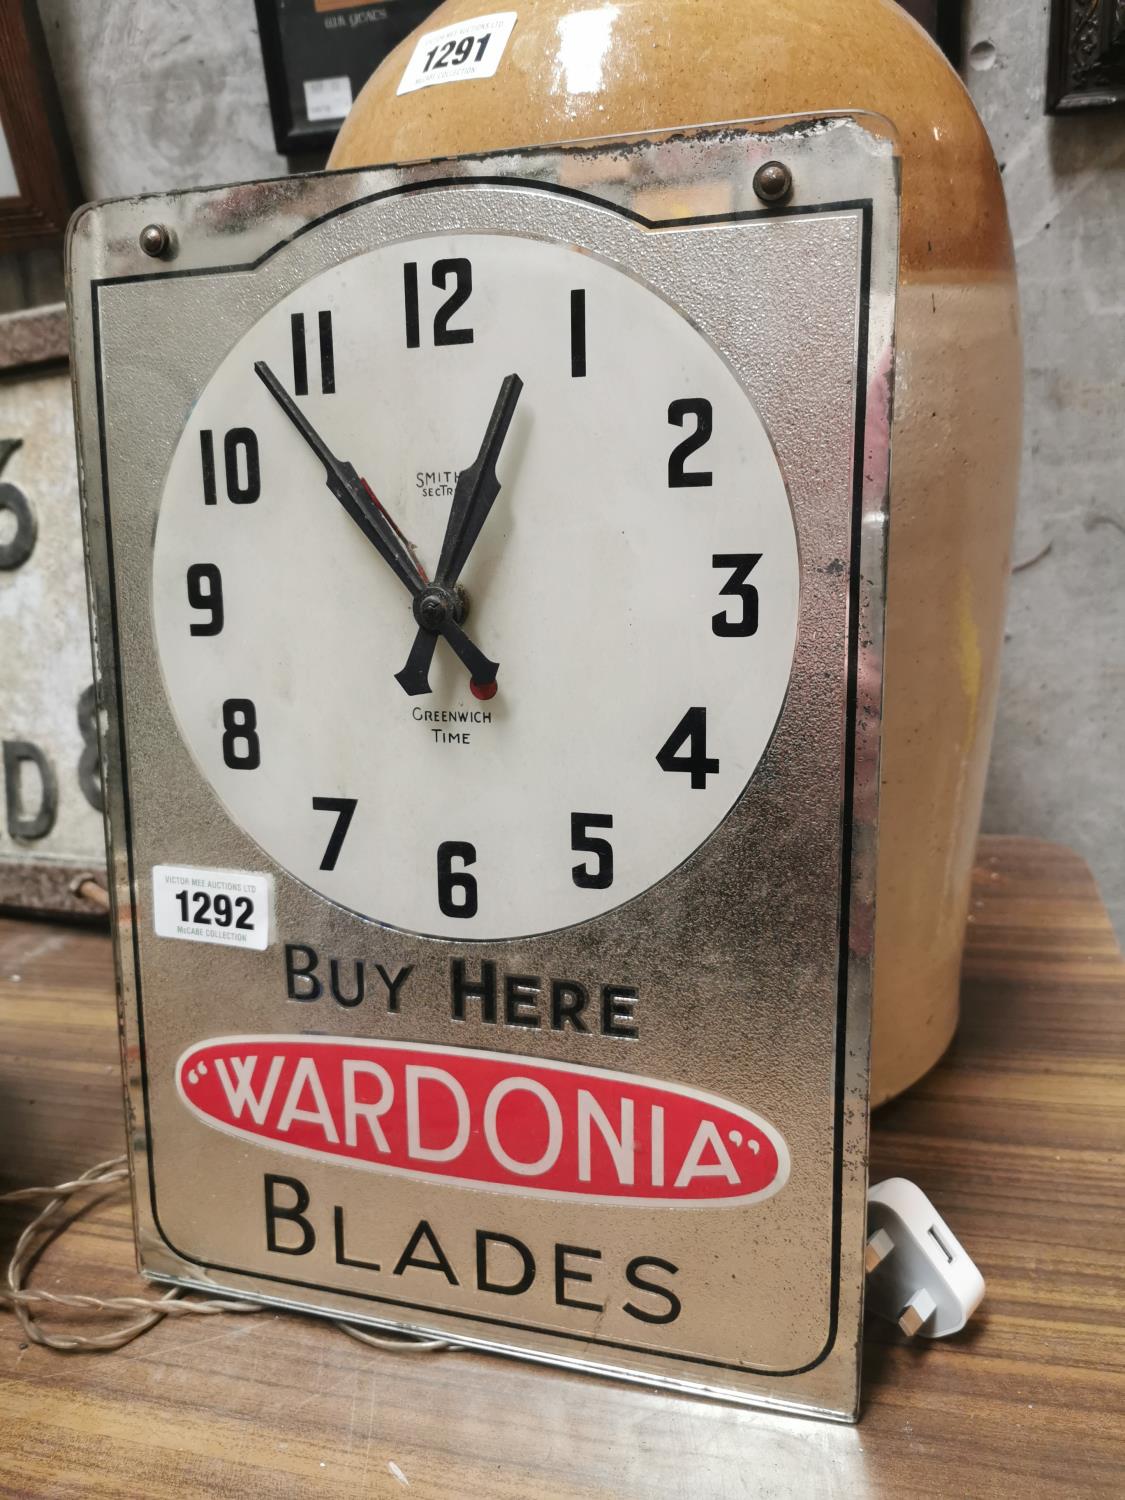 Wardonia advertising clock.